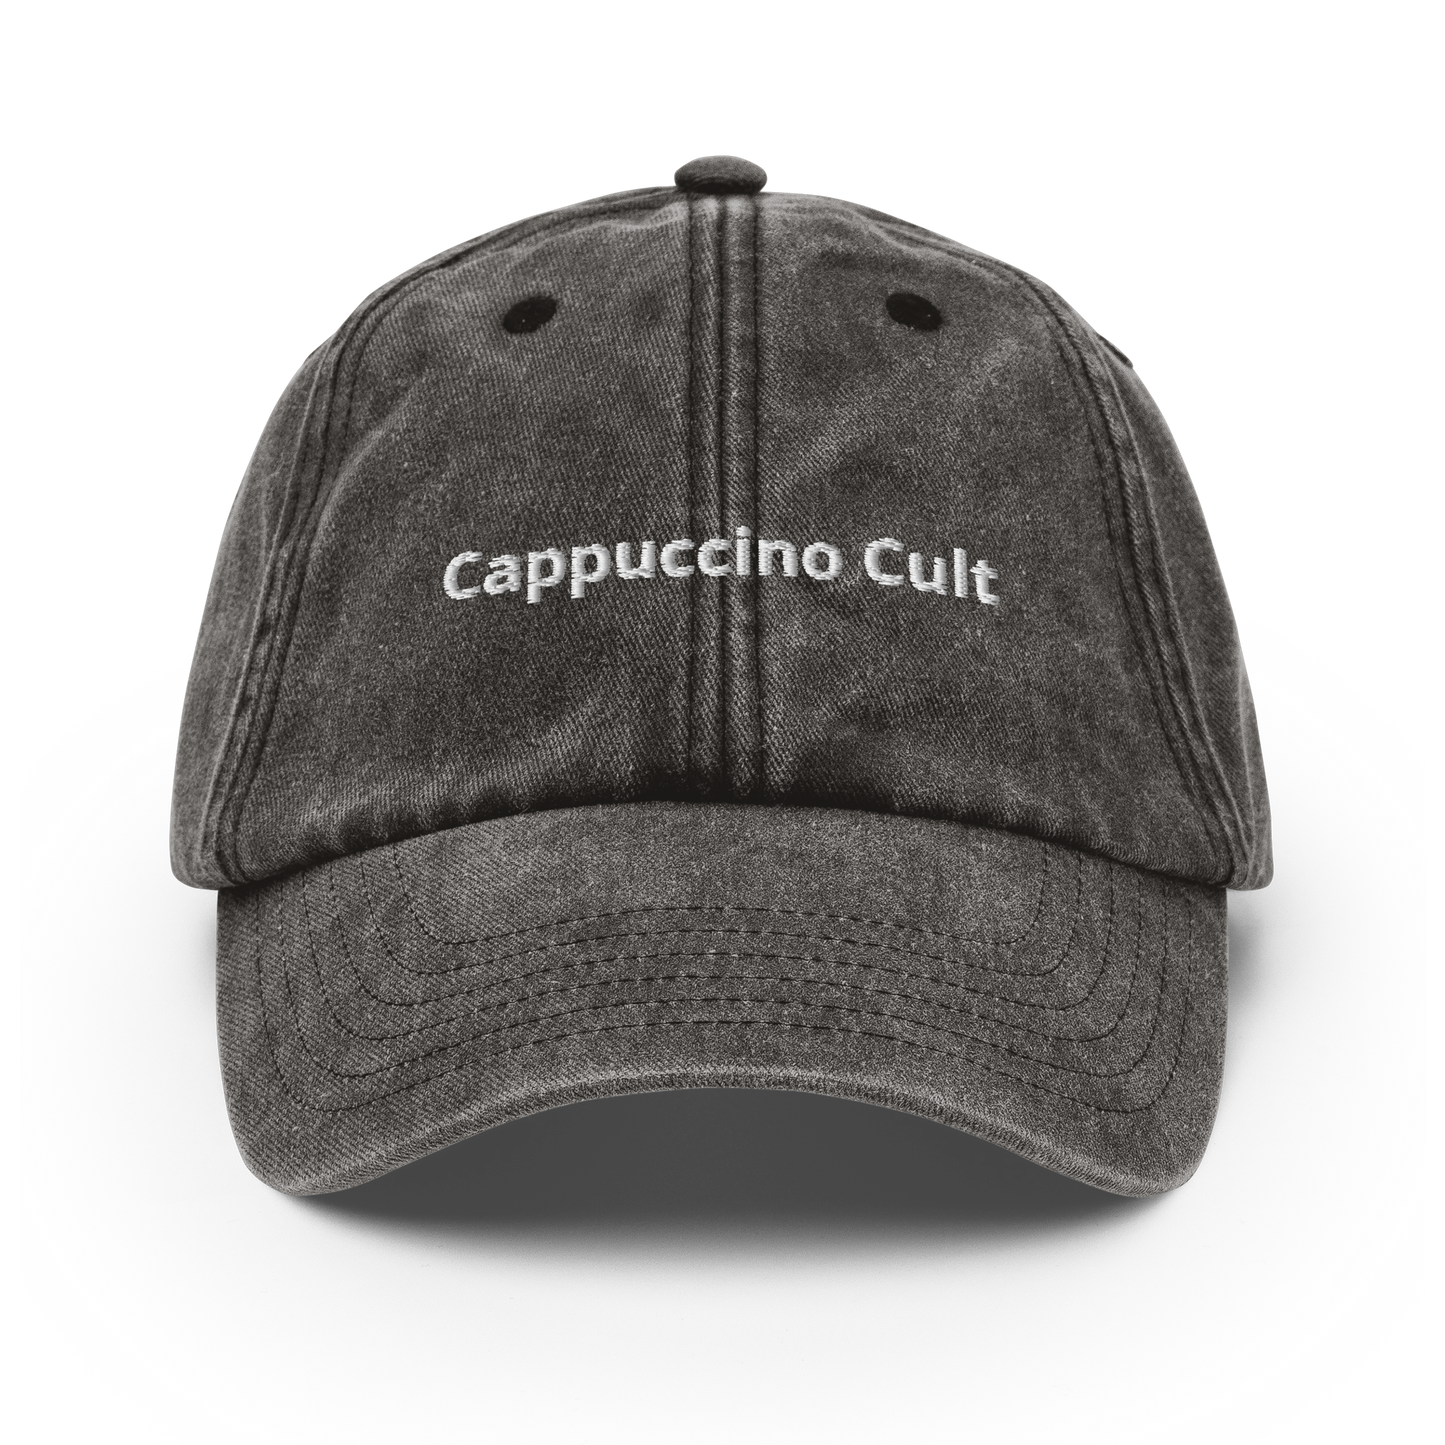 Cappuccino Cult - Vintage Hat